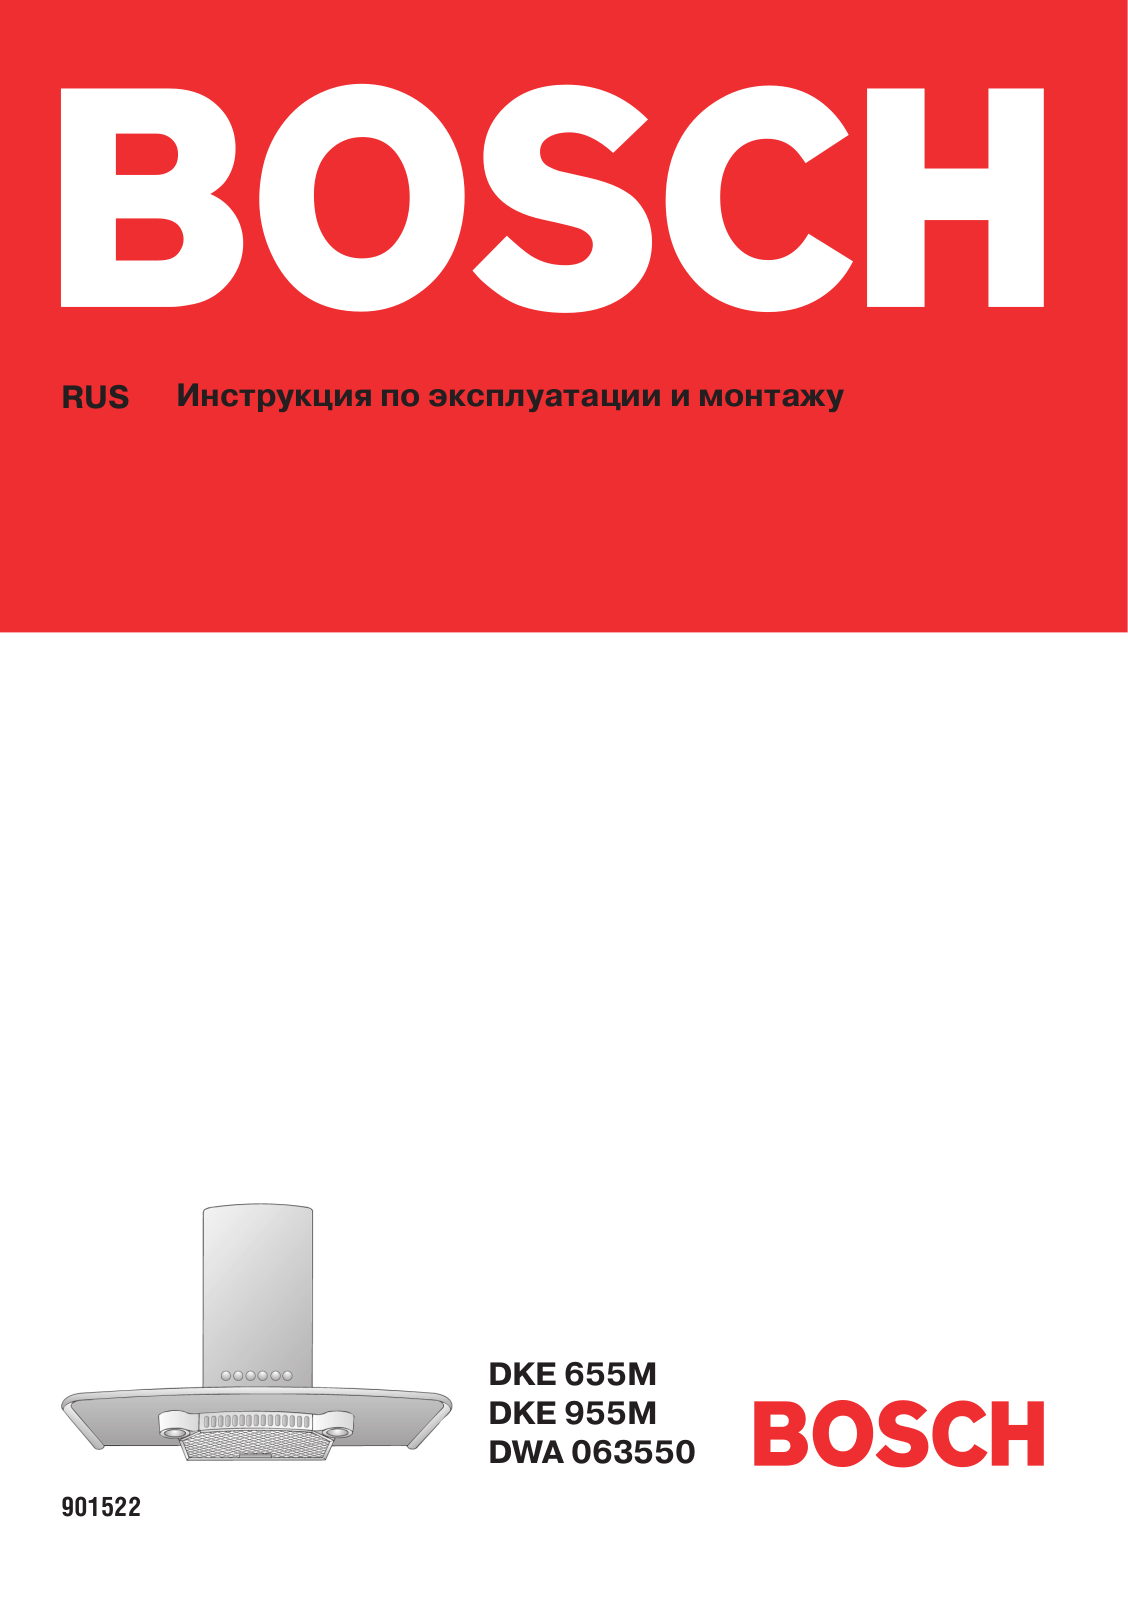 Bosch DWA 063550 User Manual